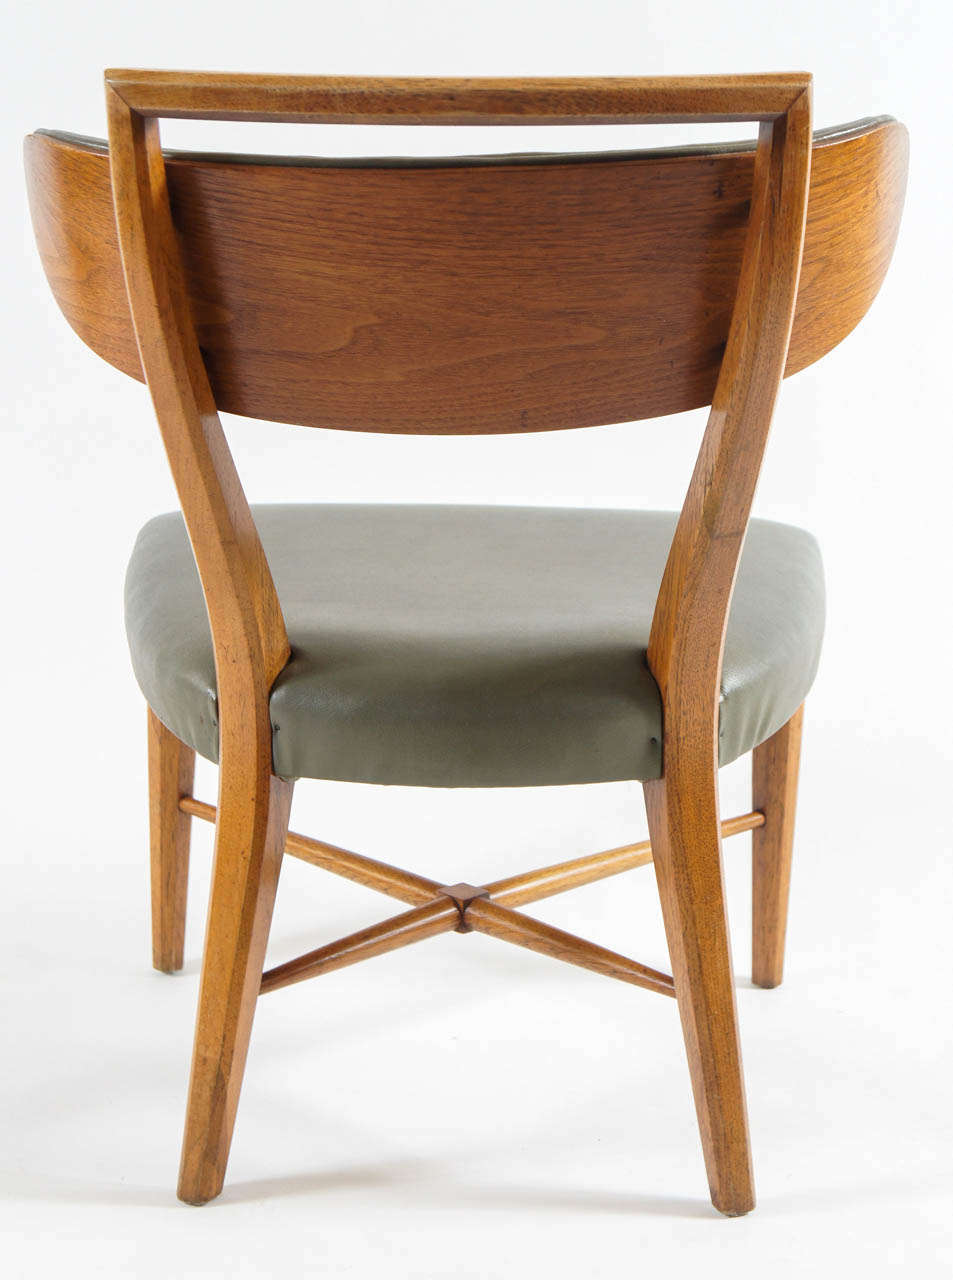 Walnut Pair of Slipper Chairs in the style of T. H. Robsjohn-Gibbings, c. 1950